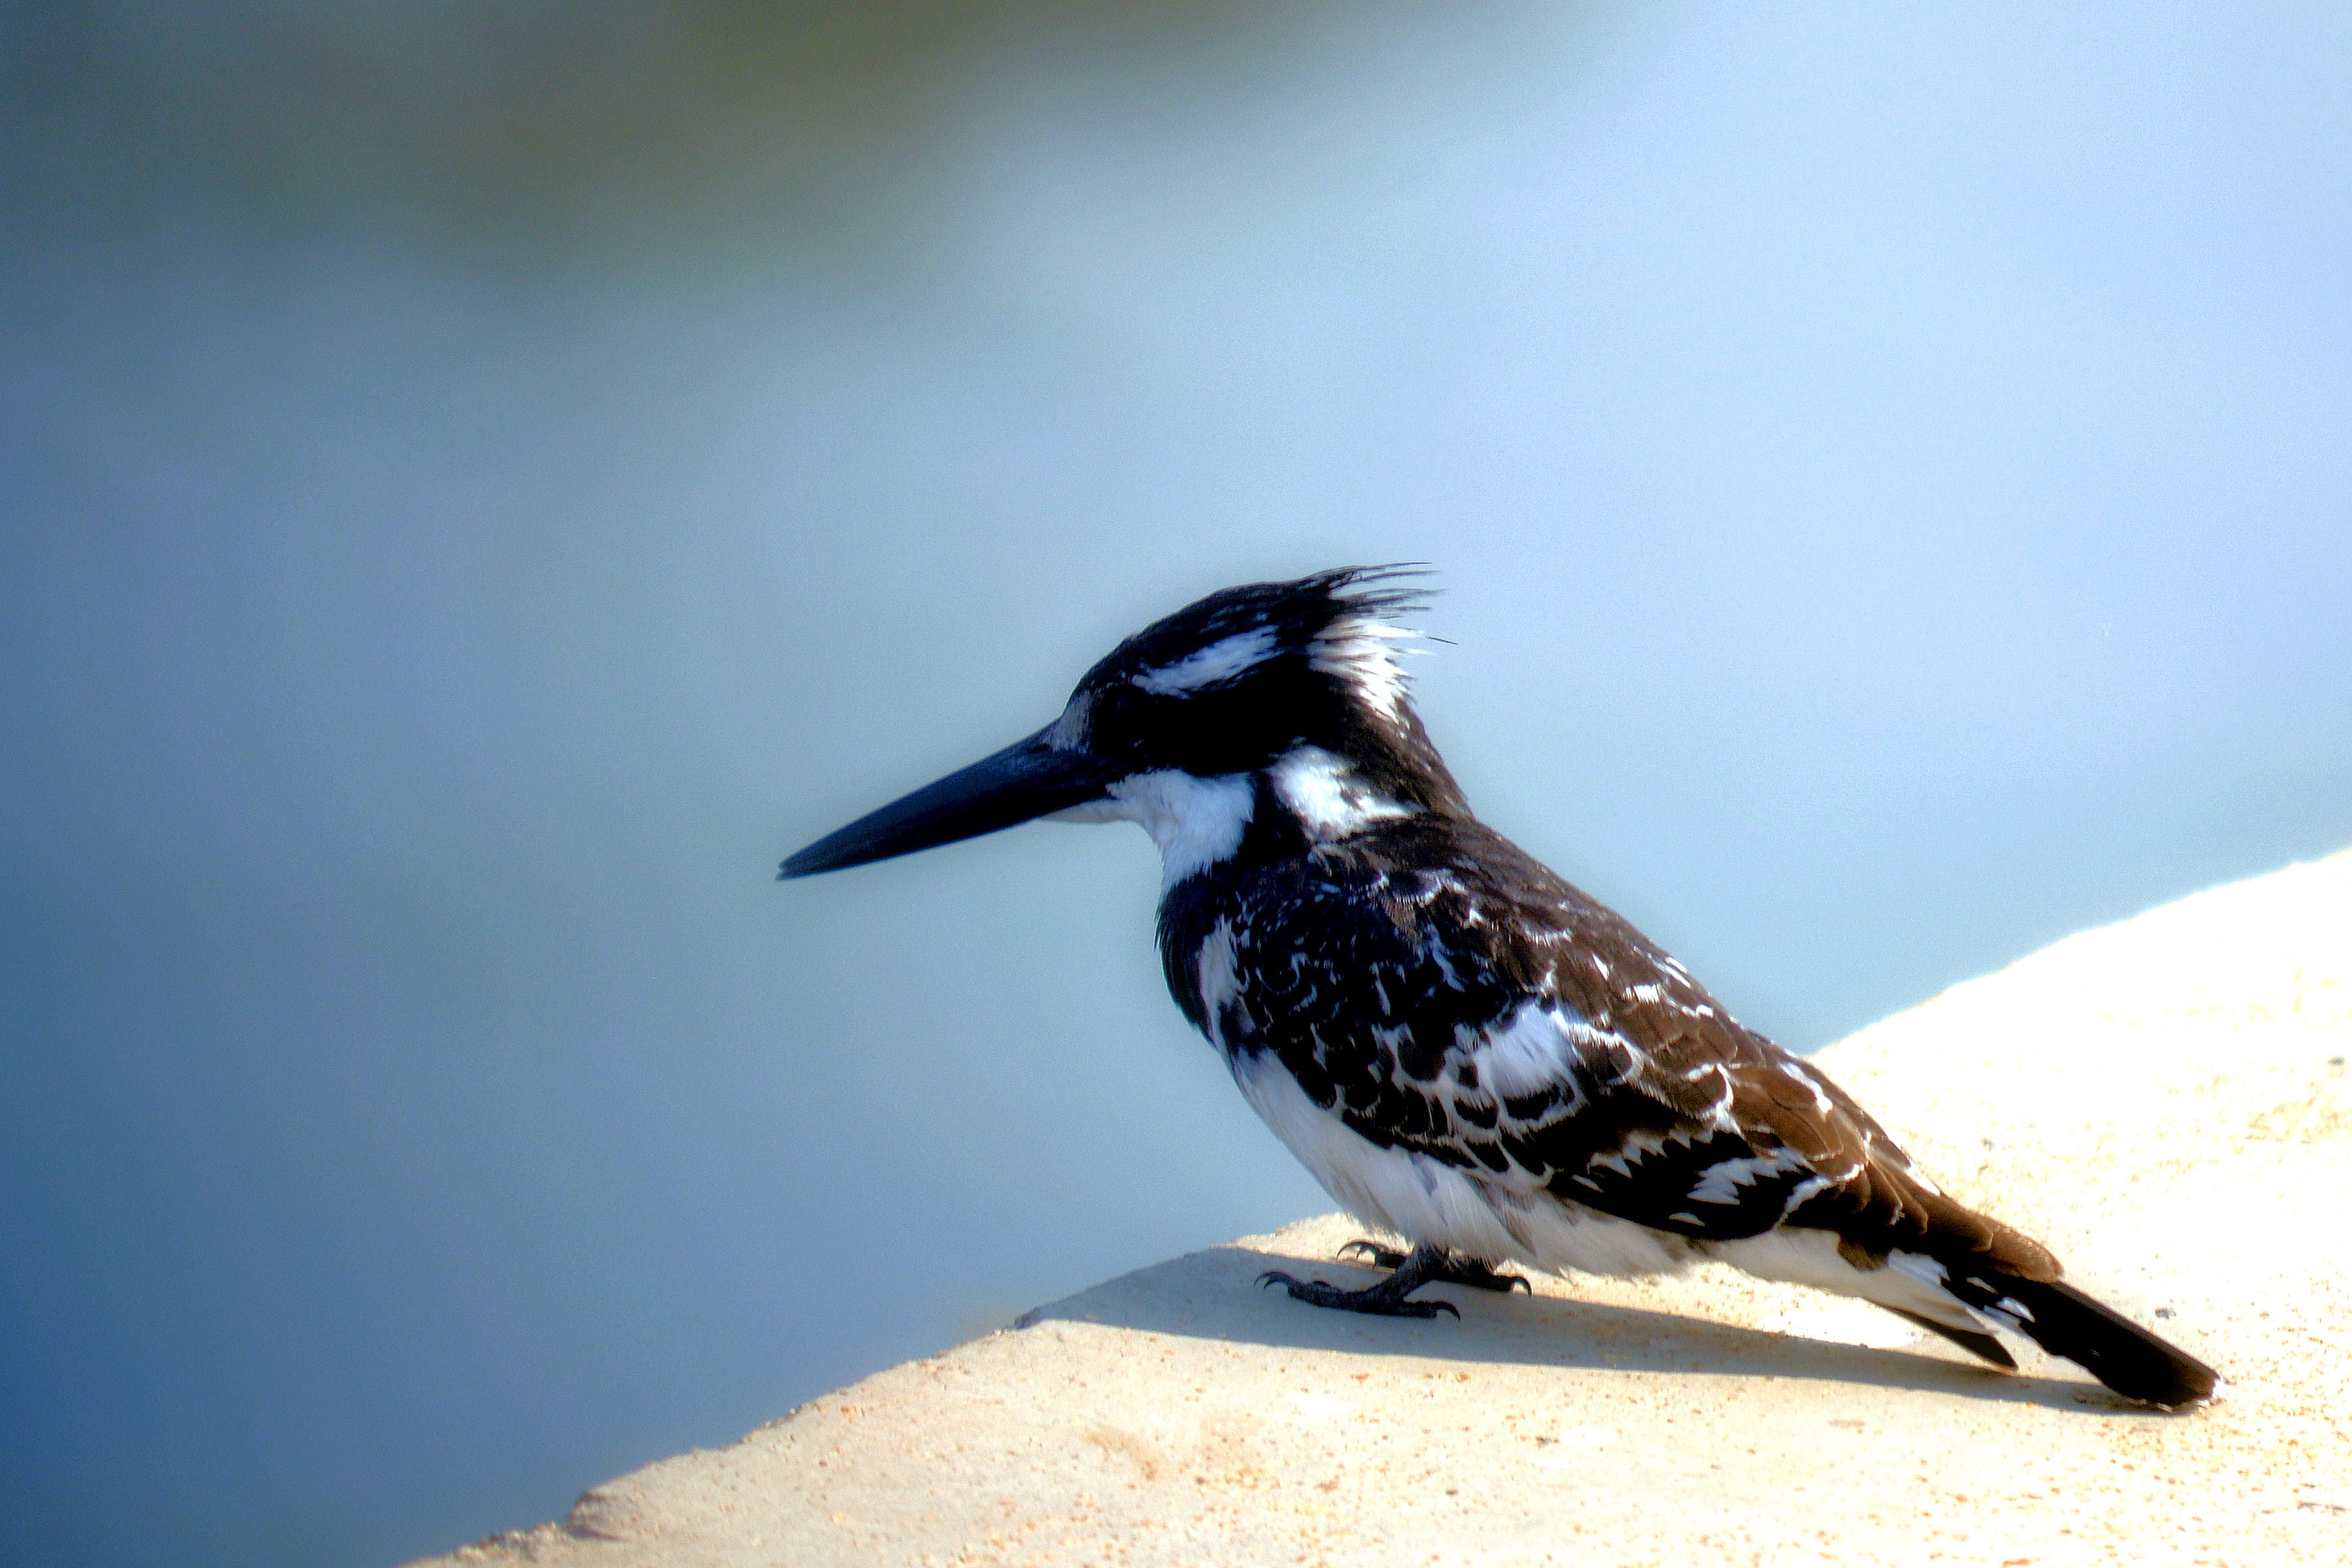 long beak, king fischer, black and white, feathered, bird, animal